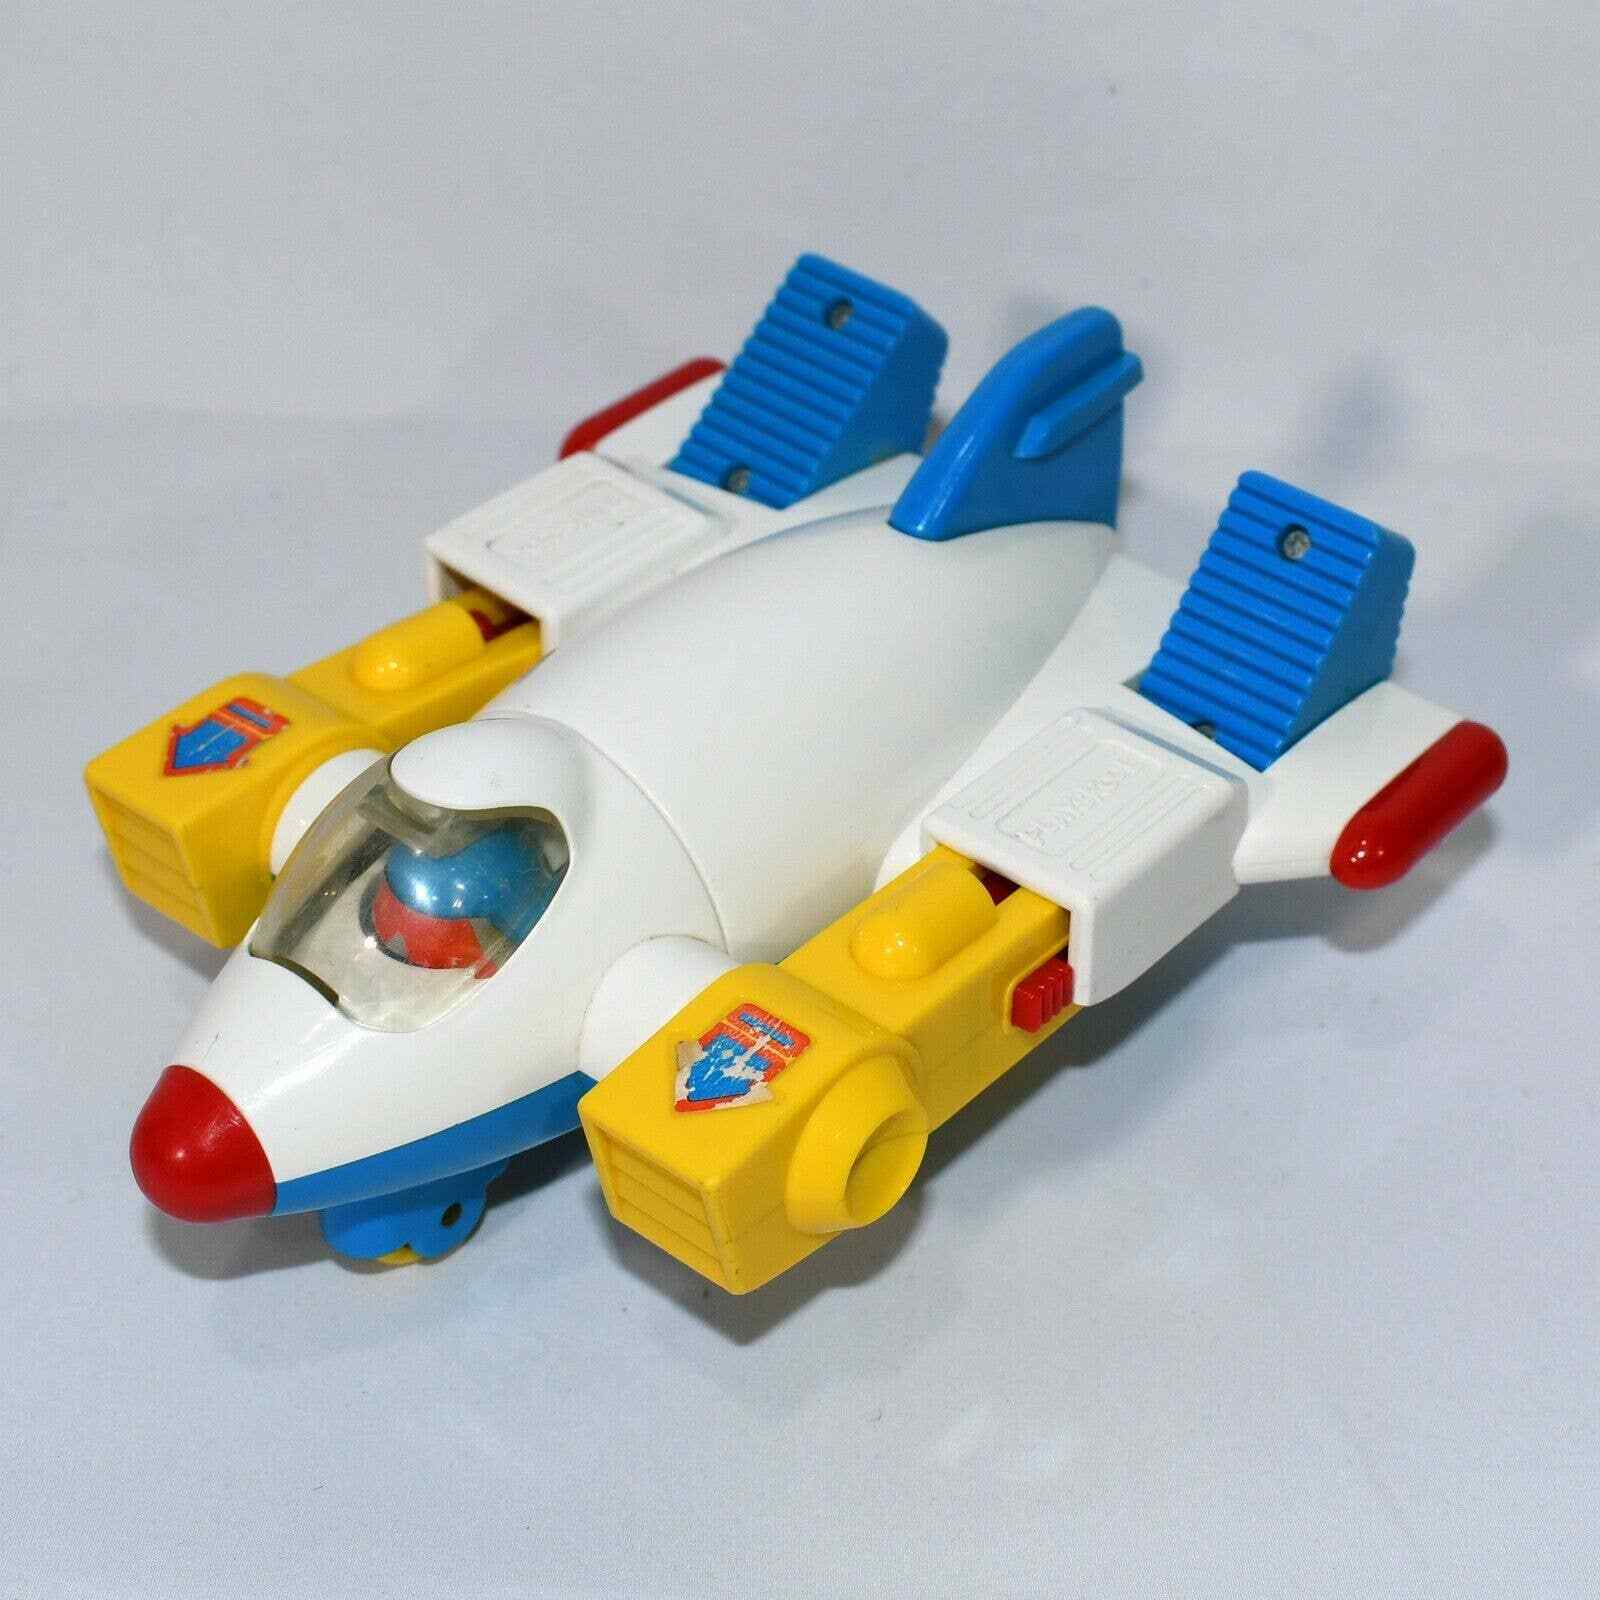 1986 Takara Playskool My First Transformer Jet-Kun Airplane Action Figure 0122!